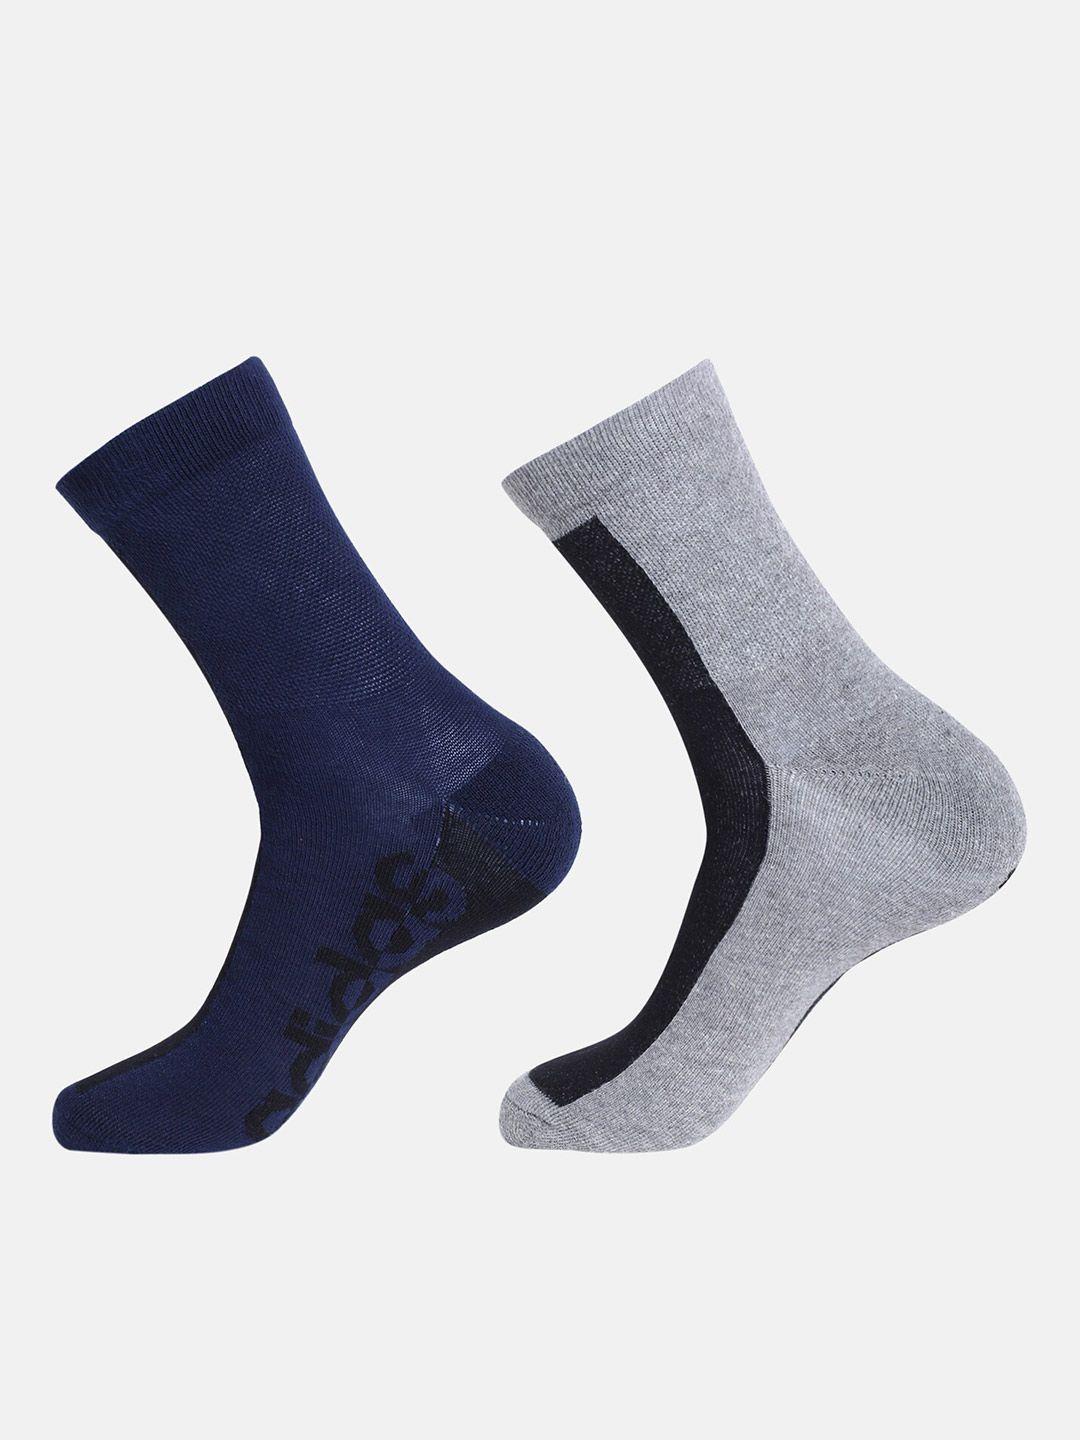 adidas men pack of 2 patterned calf-length socks